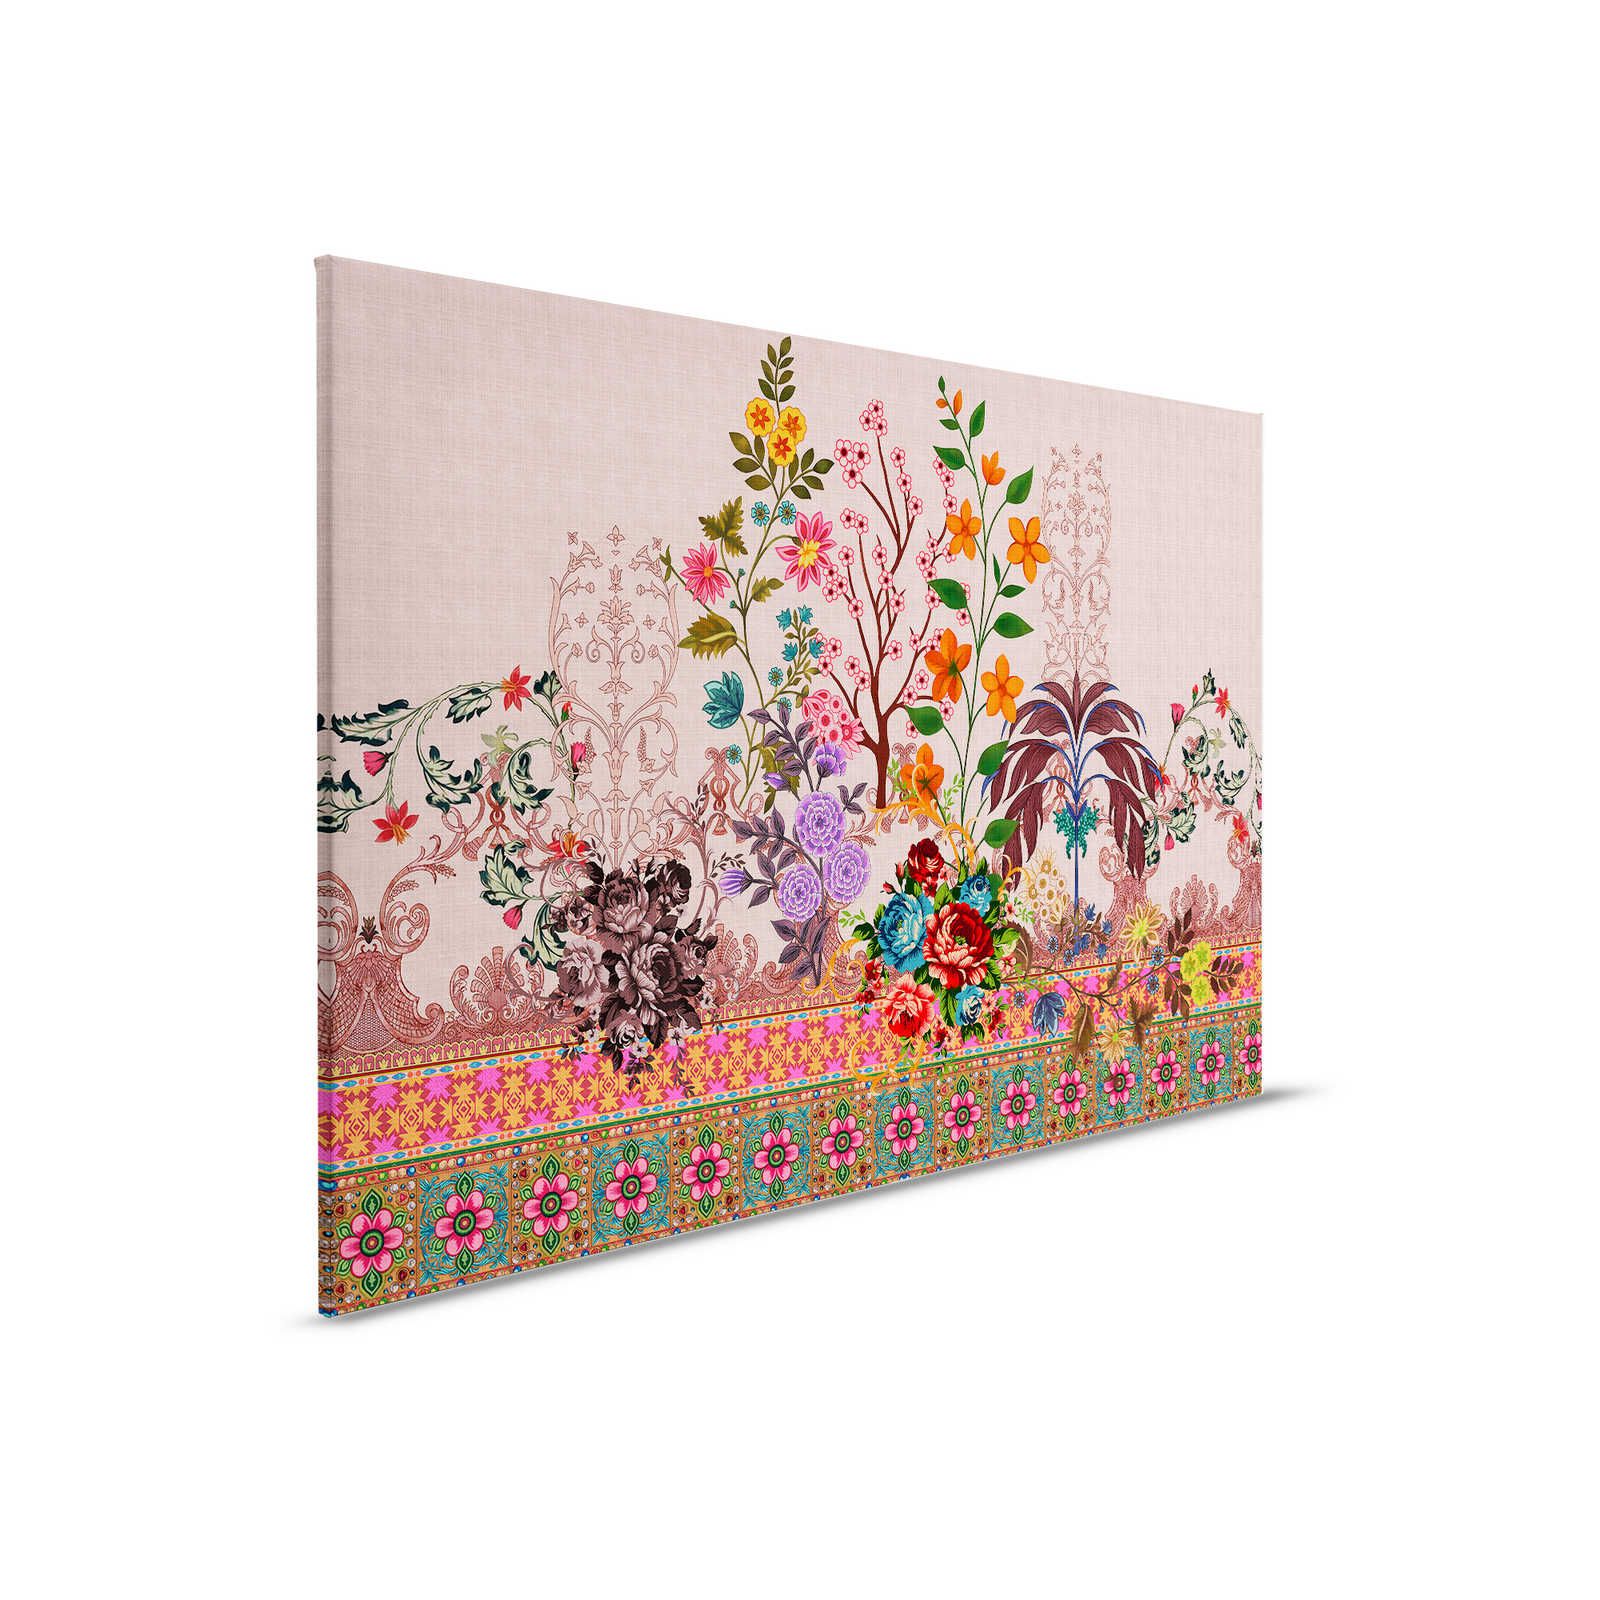 Oriental Garden 4 - Flowers canvas picture Flowers & borders pattern - 0.90 m x 0.60 m
